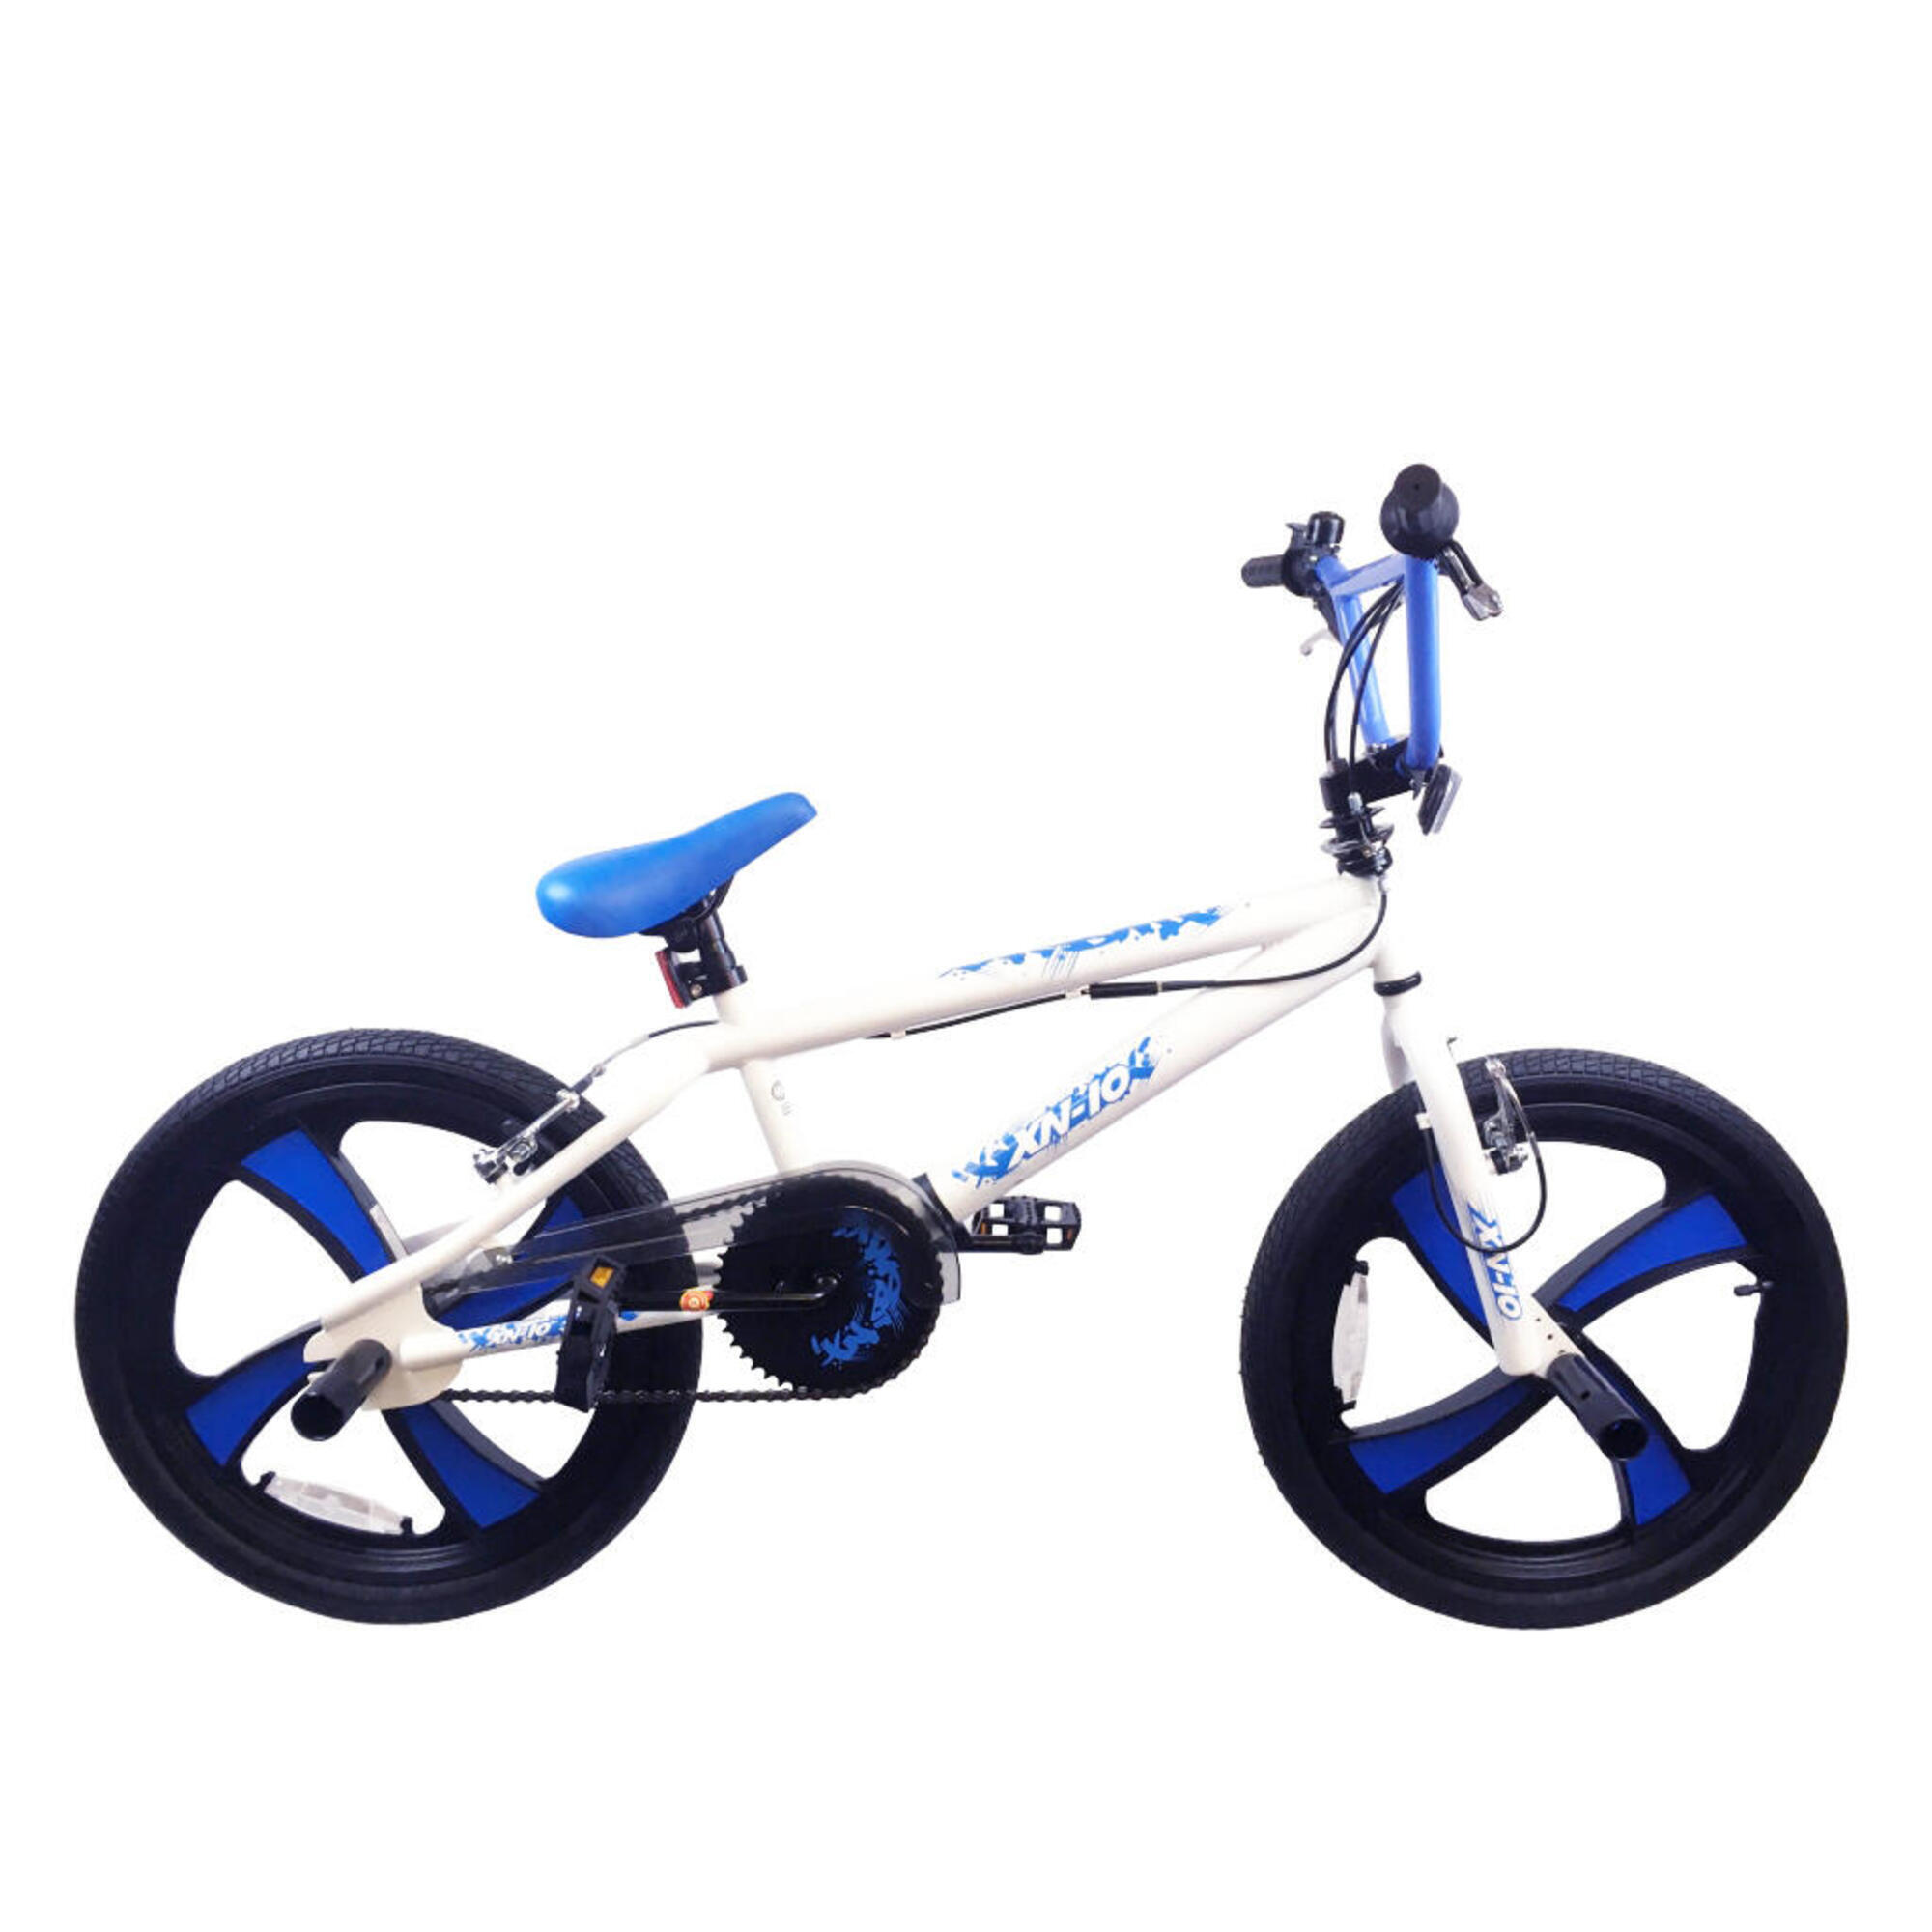 XN-10-20 Freestyle BMX Bike, 20In Wheel - White/Blue 1/5